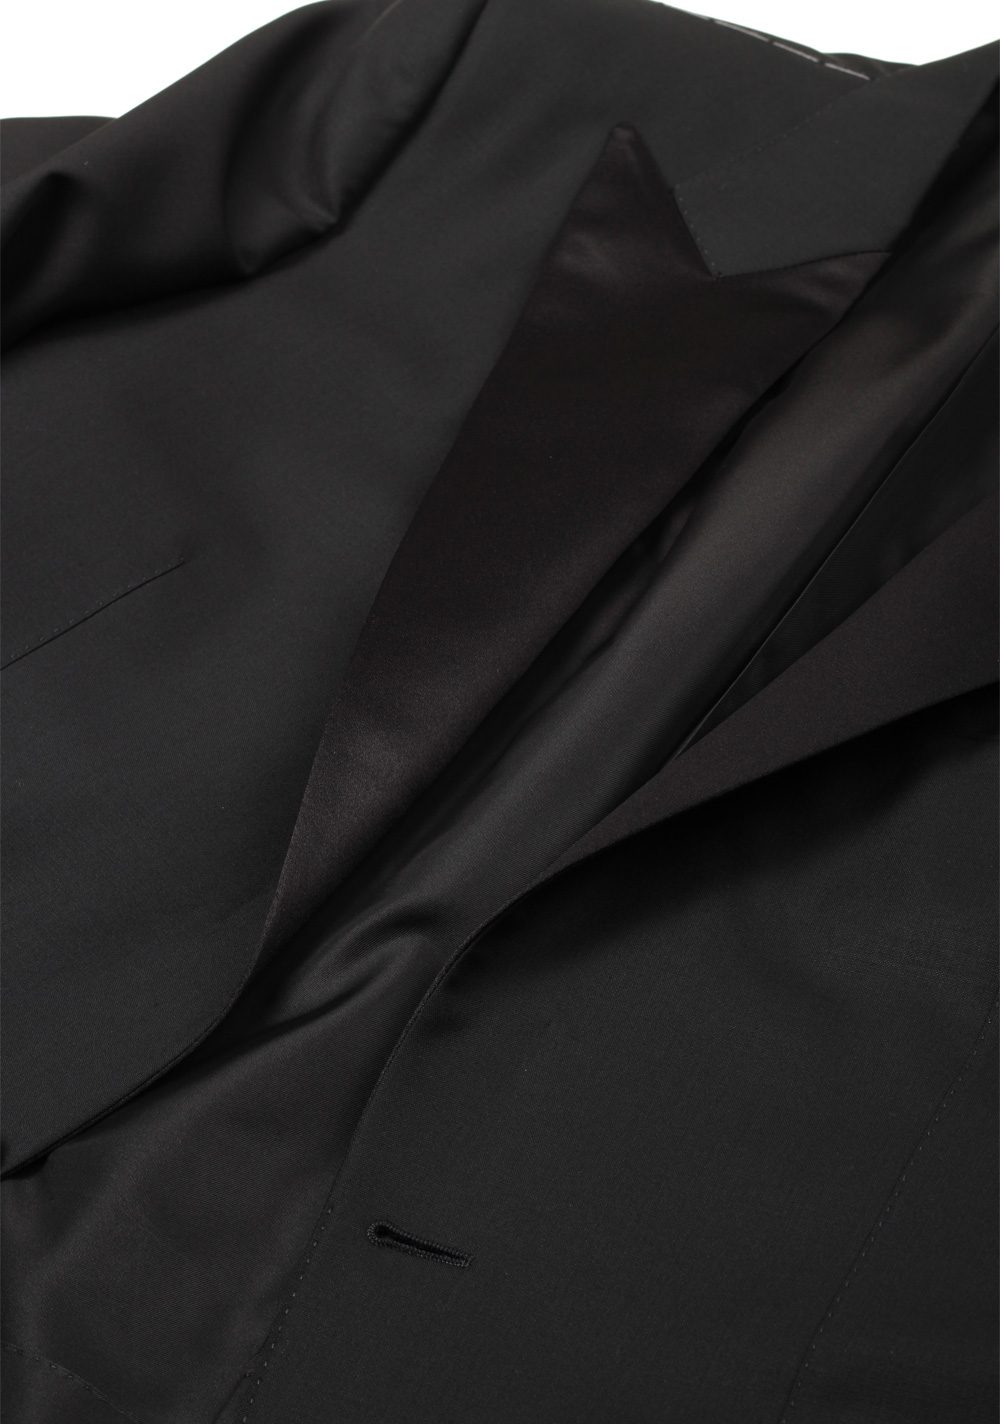 TOM FORD O’Connor Black Tuxedo Smoking Suit Size 48C / 38S U.S. Fit Y | Costume Limité